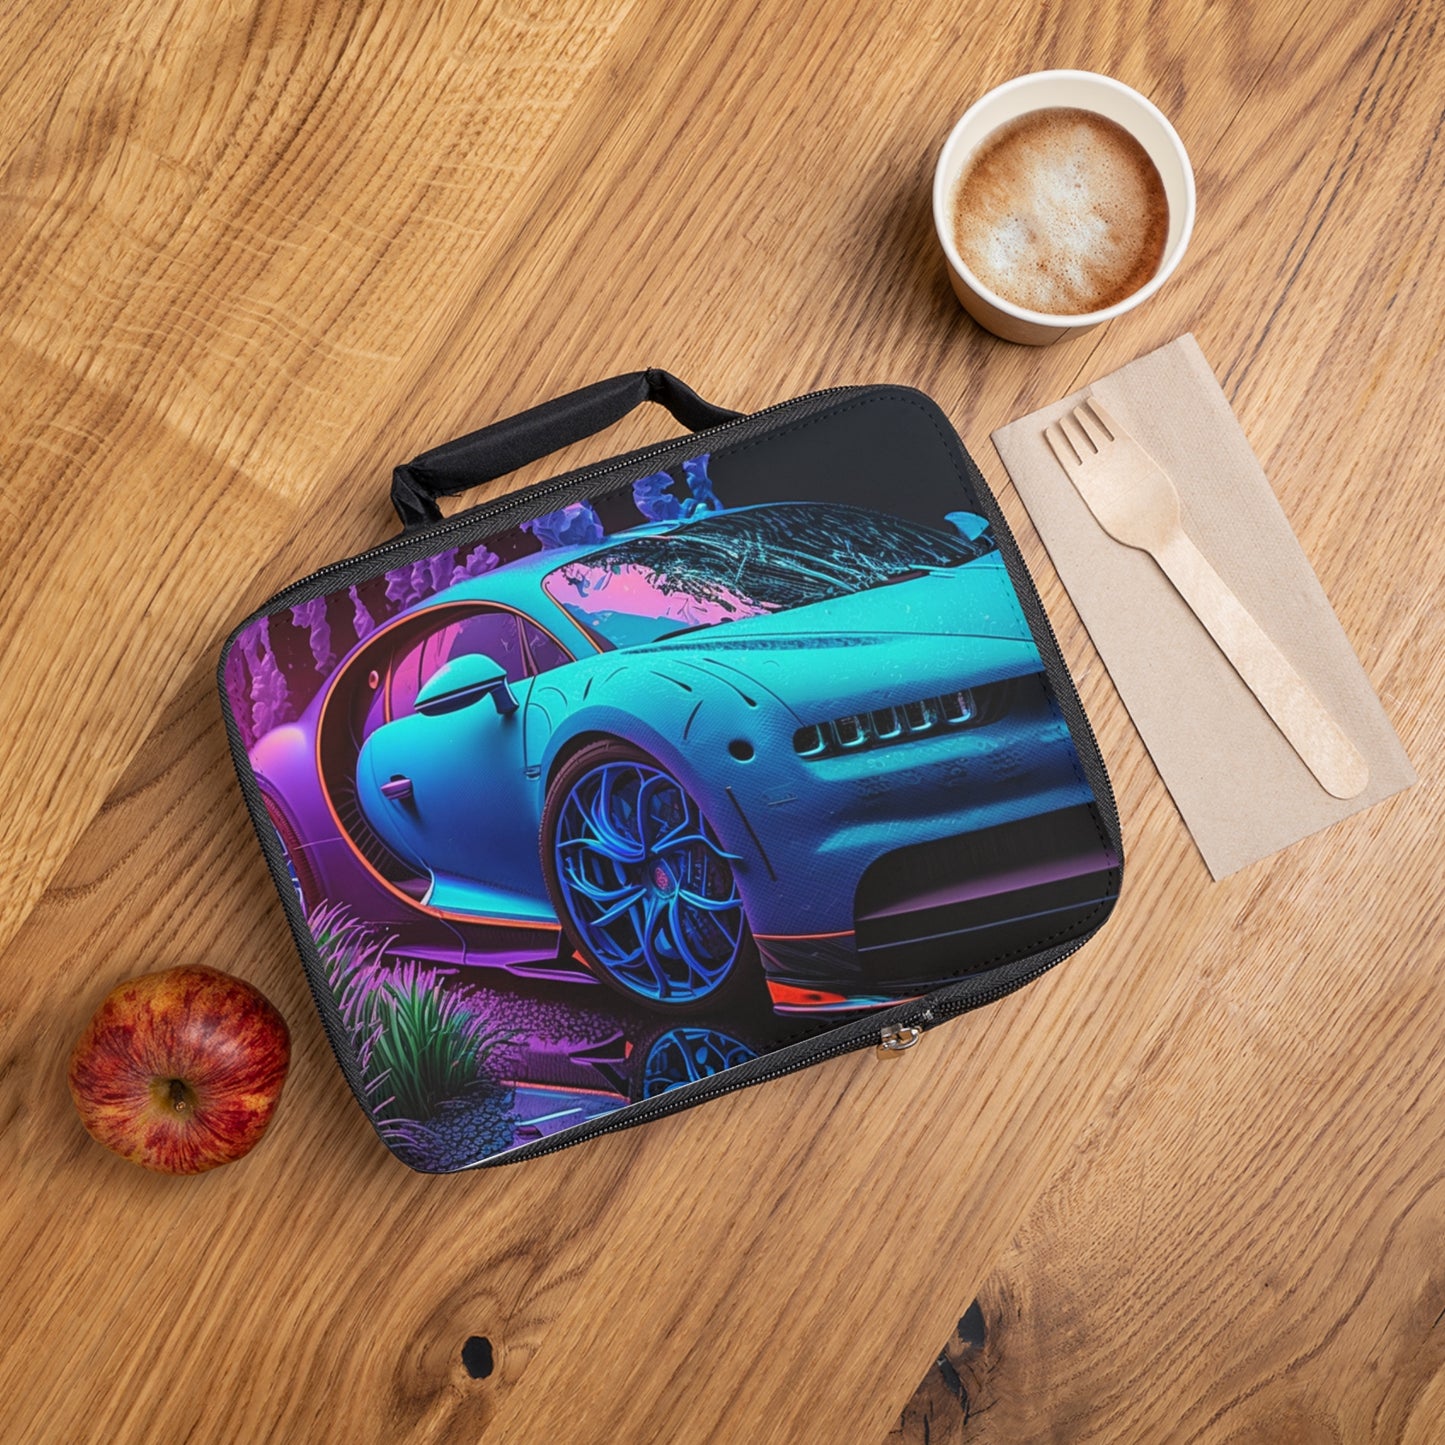 Lunch Bag Bugatti Neon Chiron 2